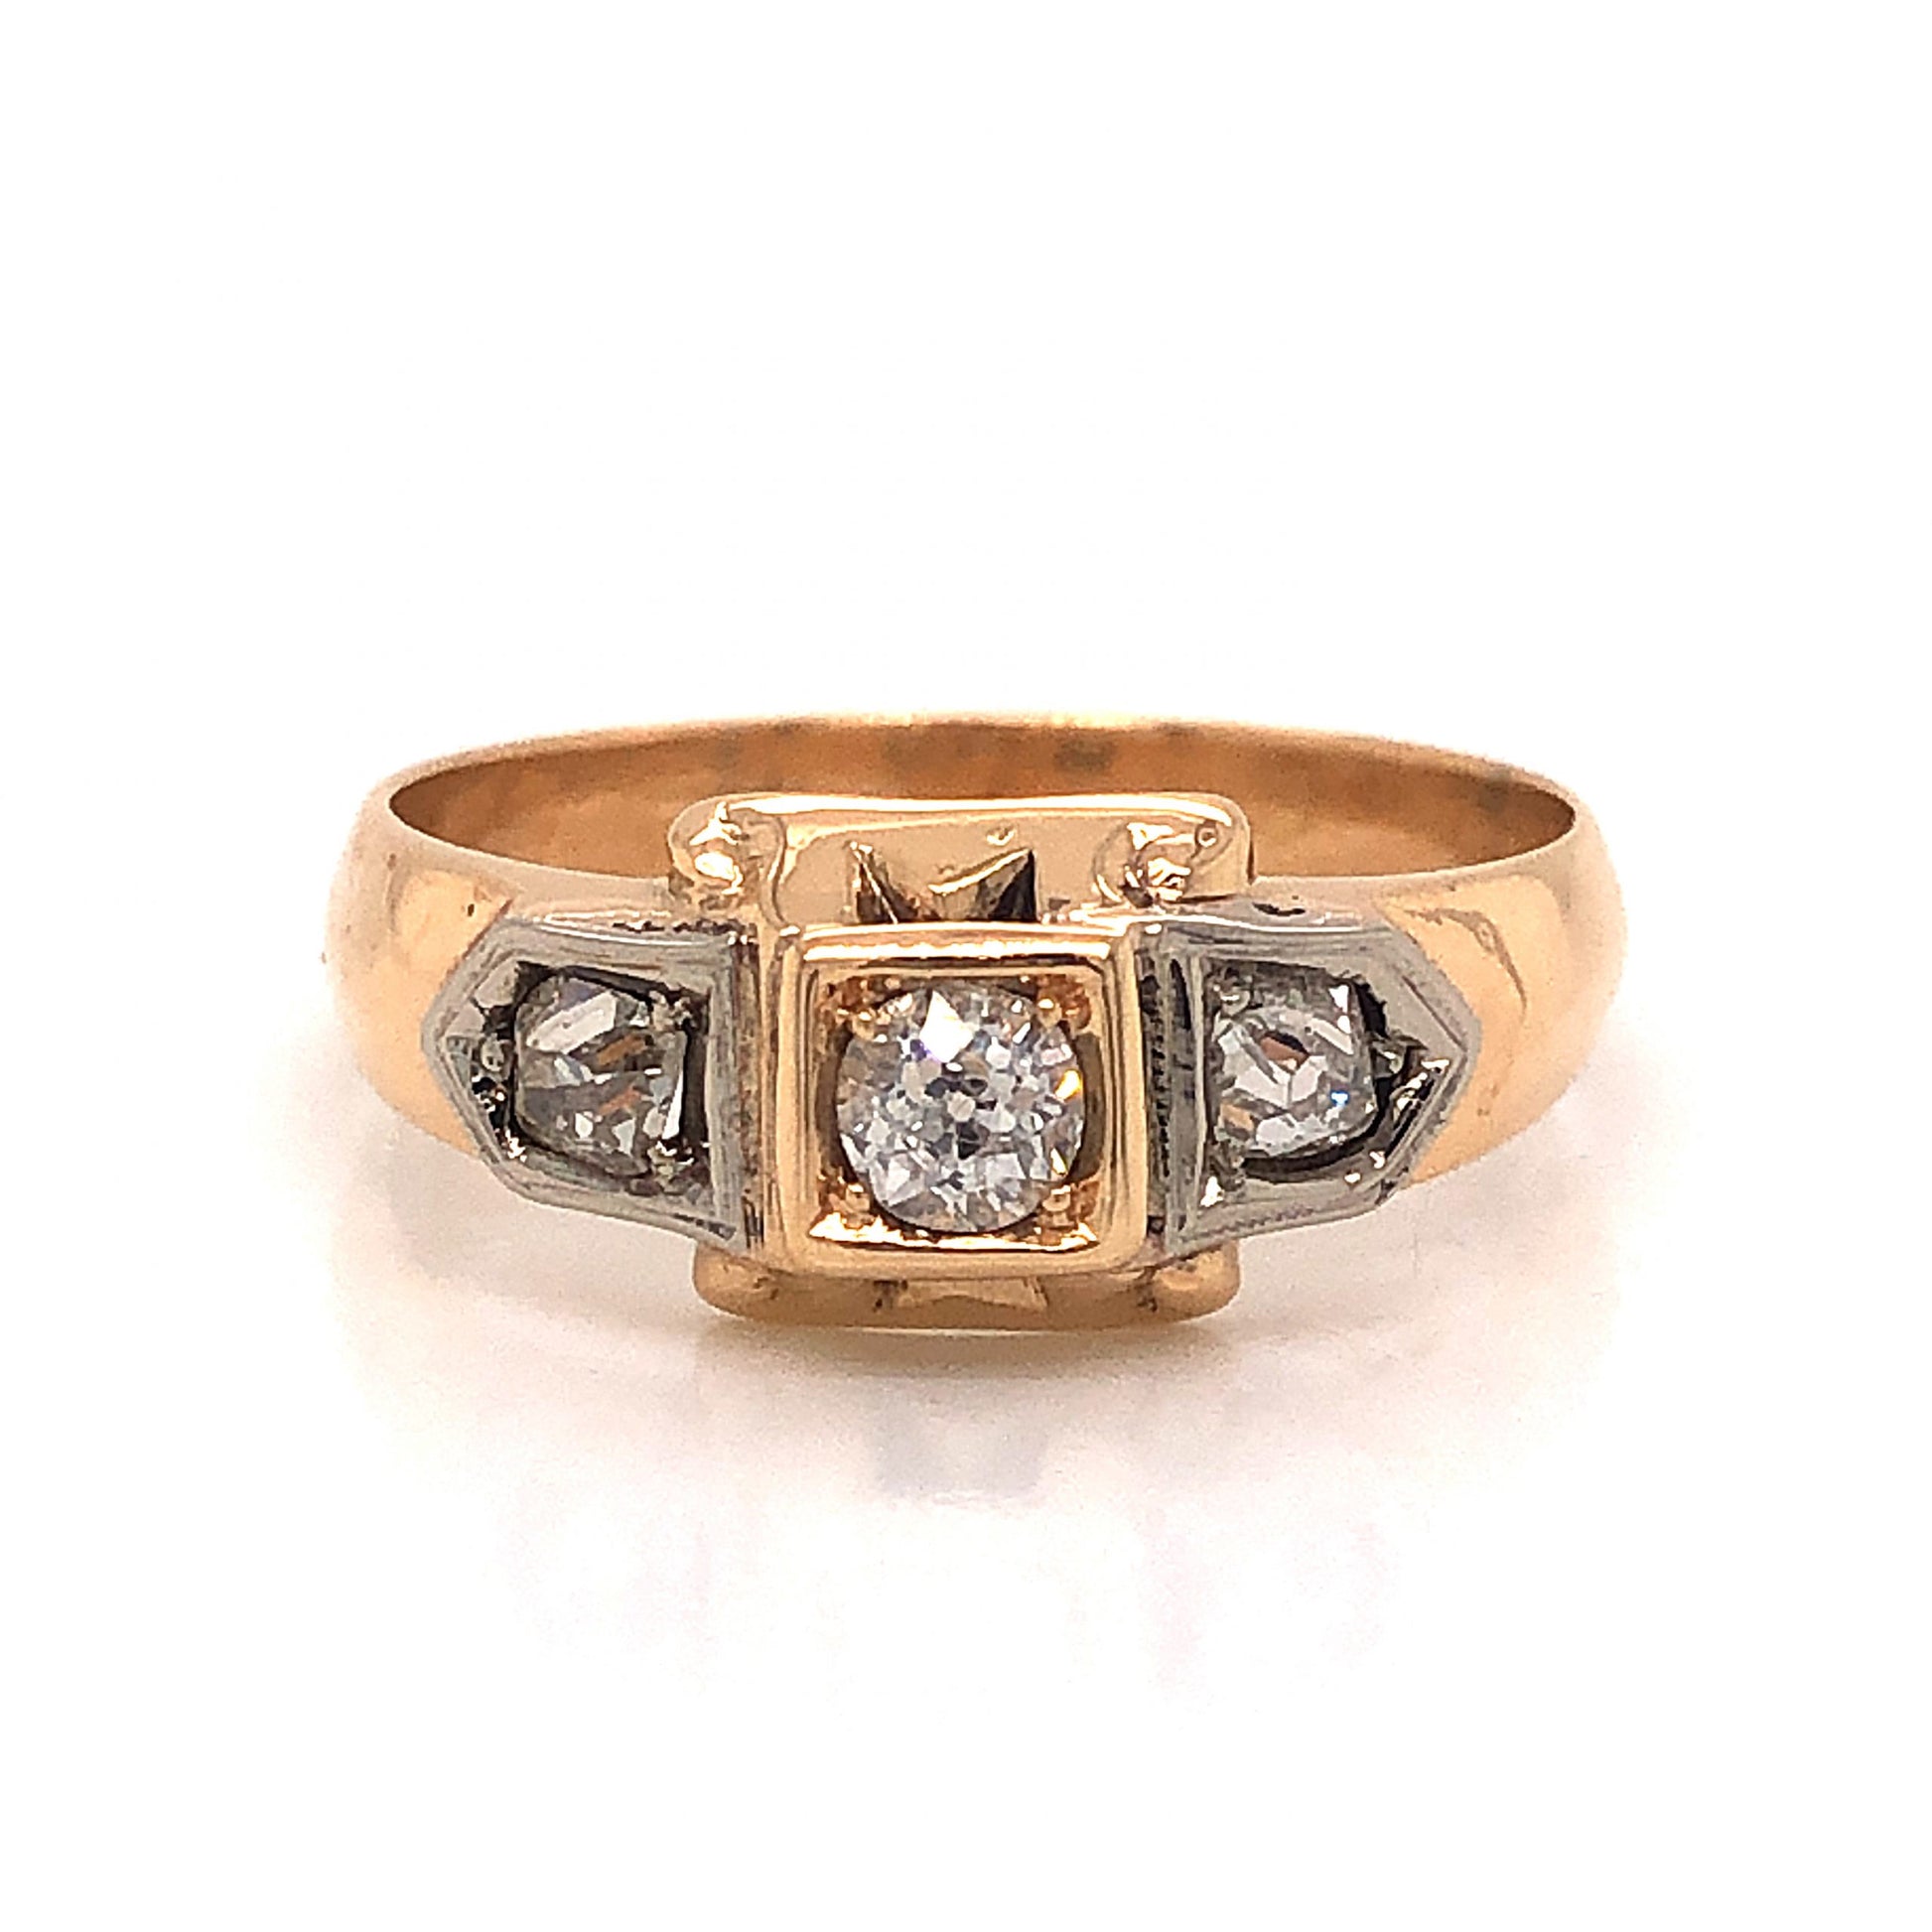 Retro Three Stone Diamond Engagement Ring 14k GoldComposition: 14 Karat Yellow Gold/14 Karat White Gold Ring Size: 8.5 Total Diamond Weight: .43ct Total Gram Weight: 4.43 g